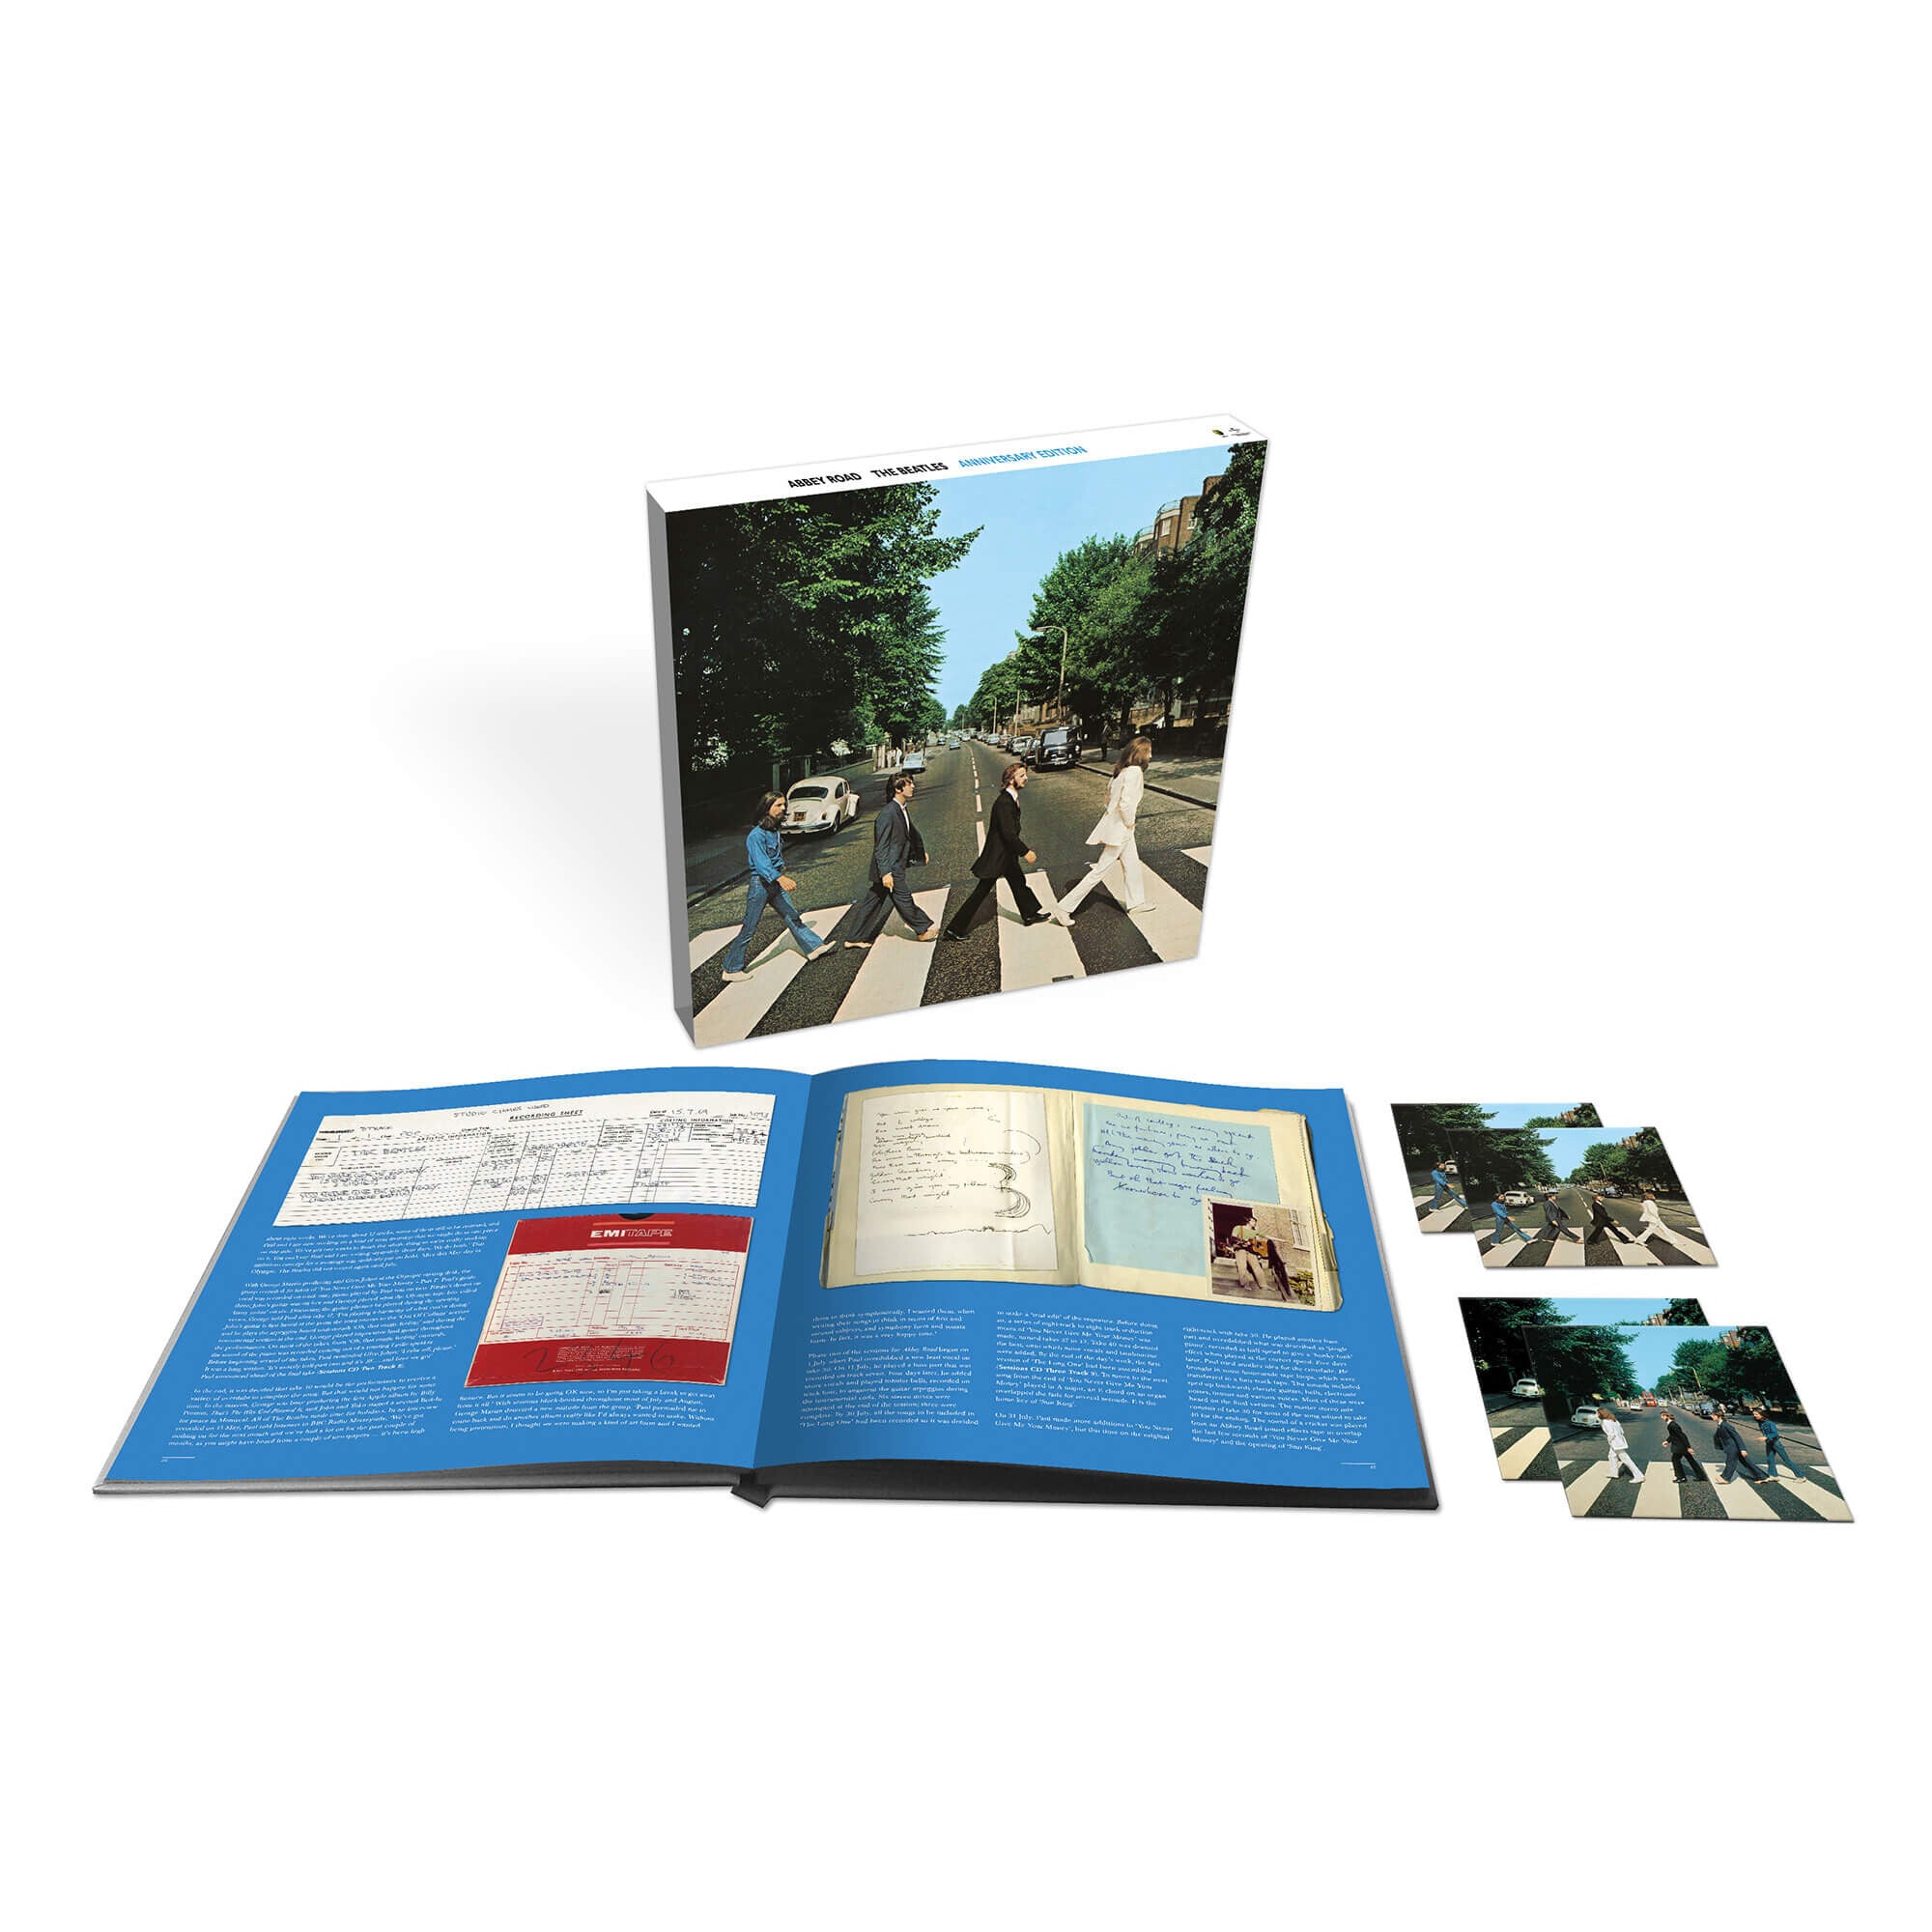 https://images.bravado.de/prod/product-assets/product-asset-data/beatles-the/the-beatles-international-1/products/130645/web/291984/image-thumb__291984__3000x3000_original/The-Beatles-Abbey-Road-Anniversary-Edition-1LP-Vinyl-130645-291984.jpg